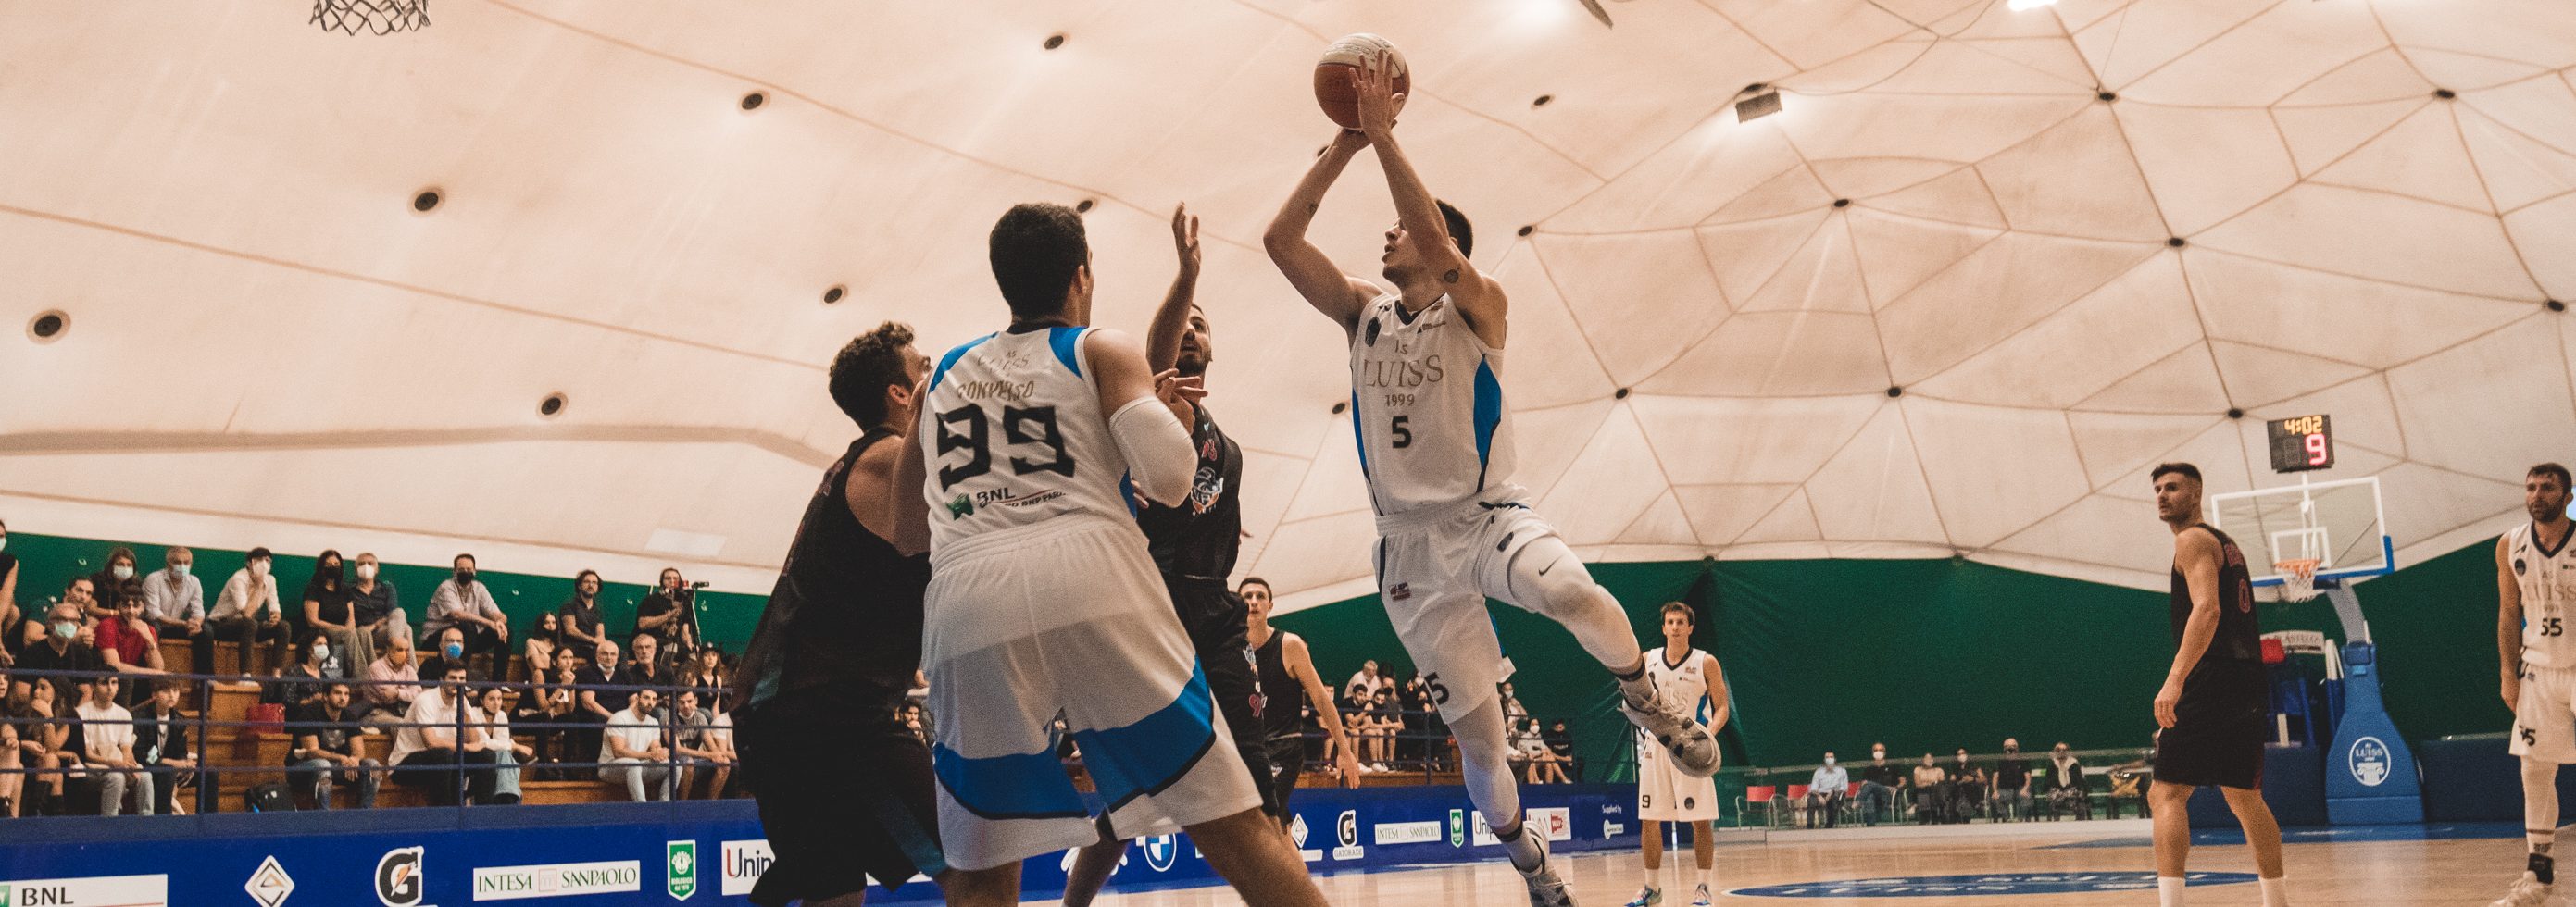 Basket serie B, la Luiss BNL cede contro Senigallia